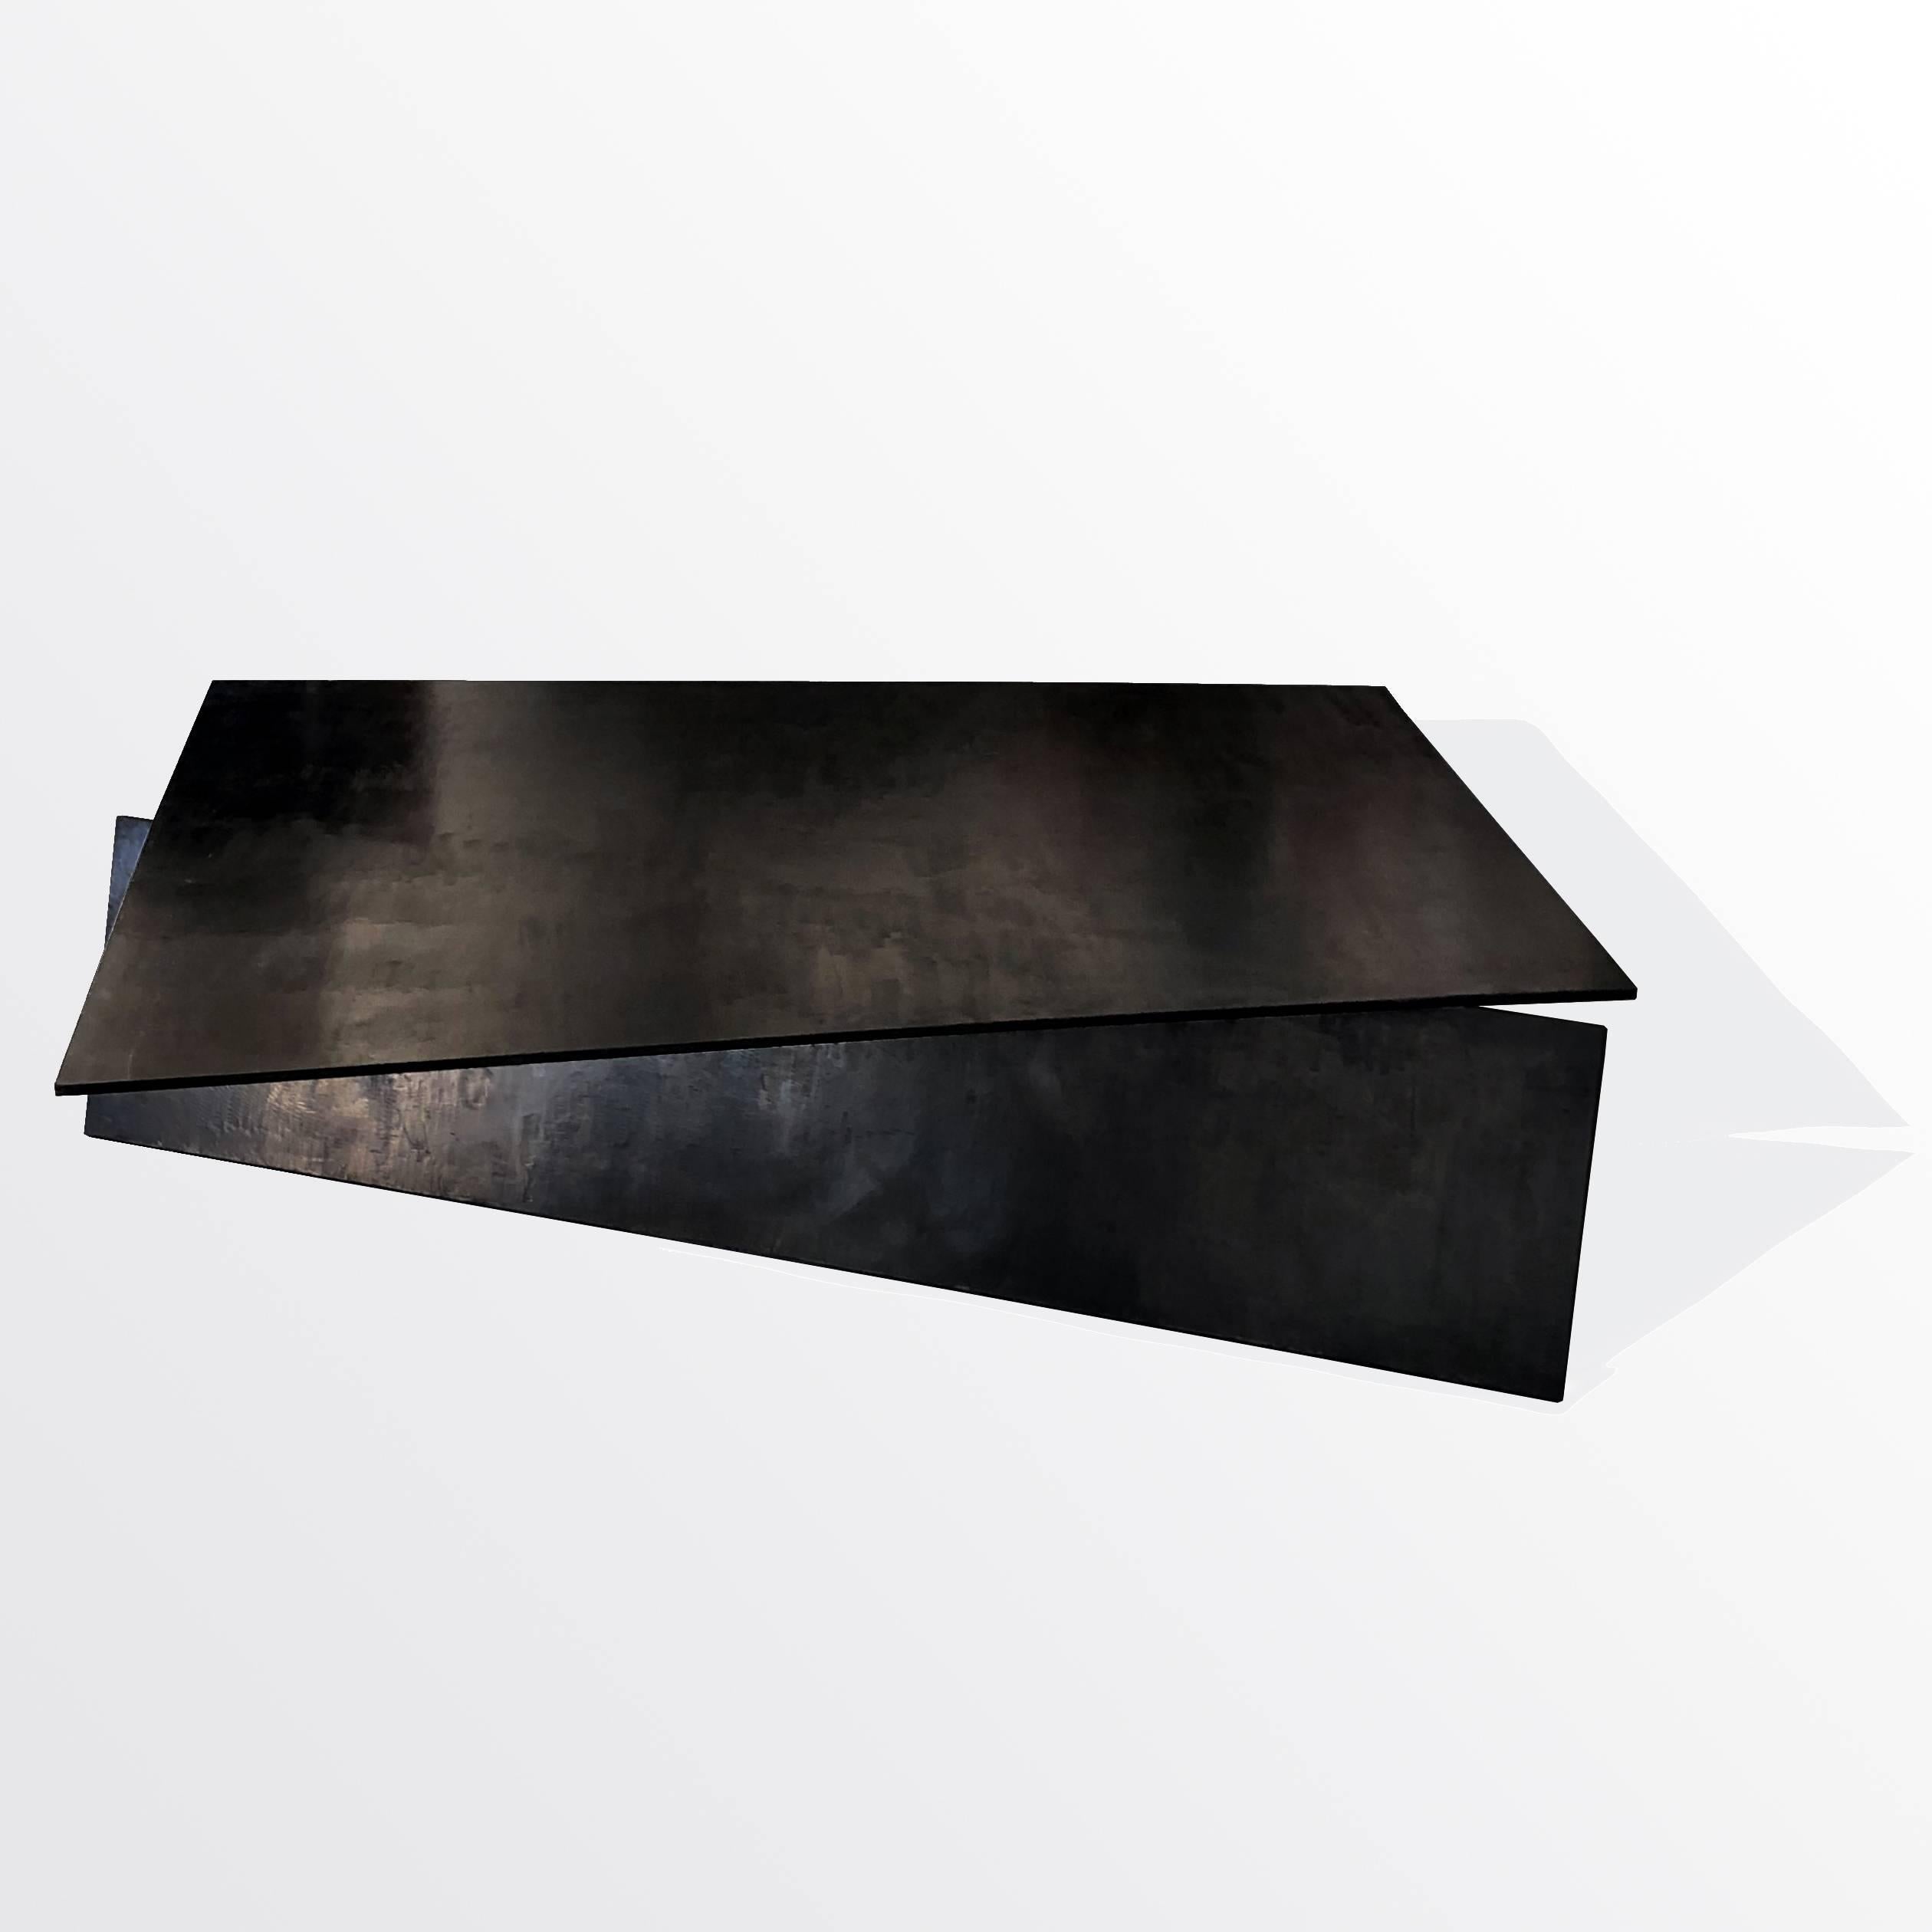 American Coffee Table Modern Geometric Planes Angles Balanced Handmade Blackened Steel For Sale